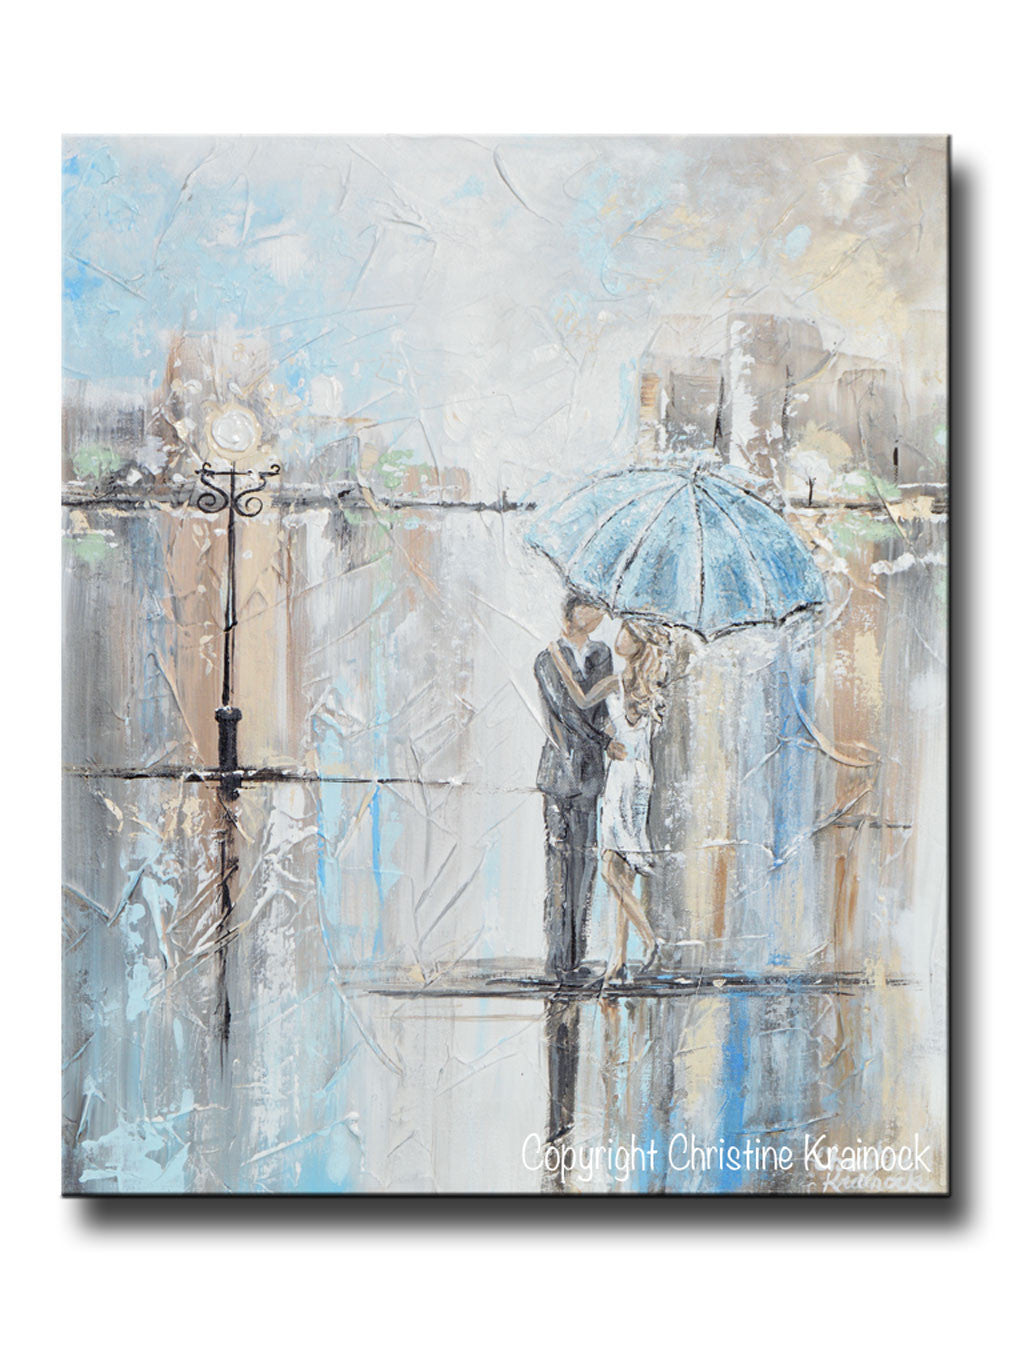 ORIGINAL Art Abstract Painting Couple with Umbrella Romantic Dance Rain Textured White Blue Grey Wall Art Home Decor 24x20" - Christine Krainock Art - Contemporary Art by Christine - 1